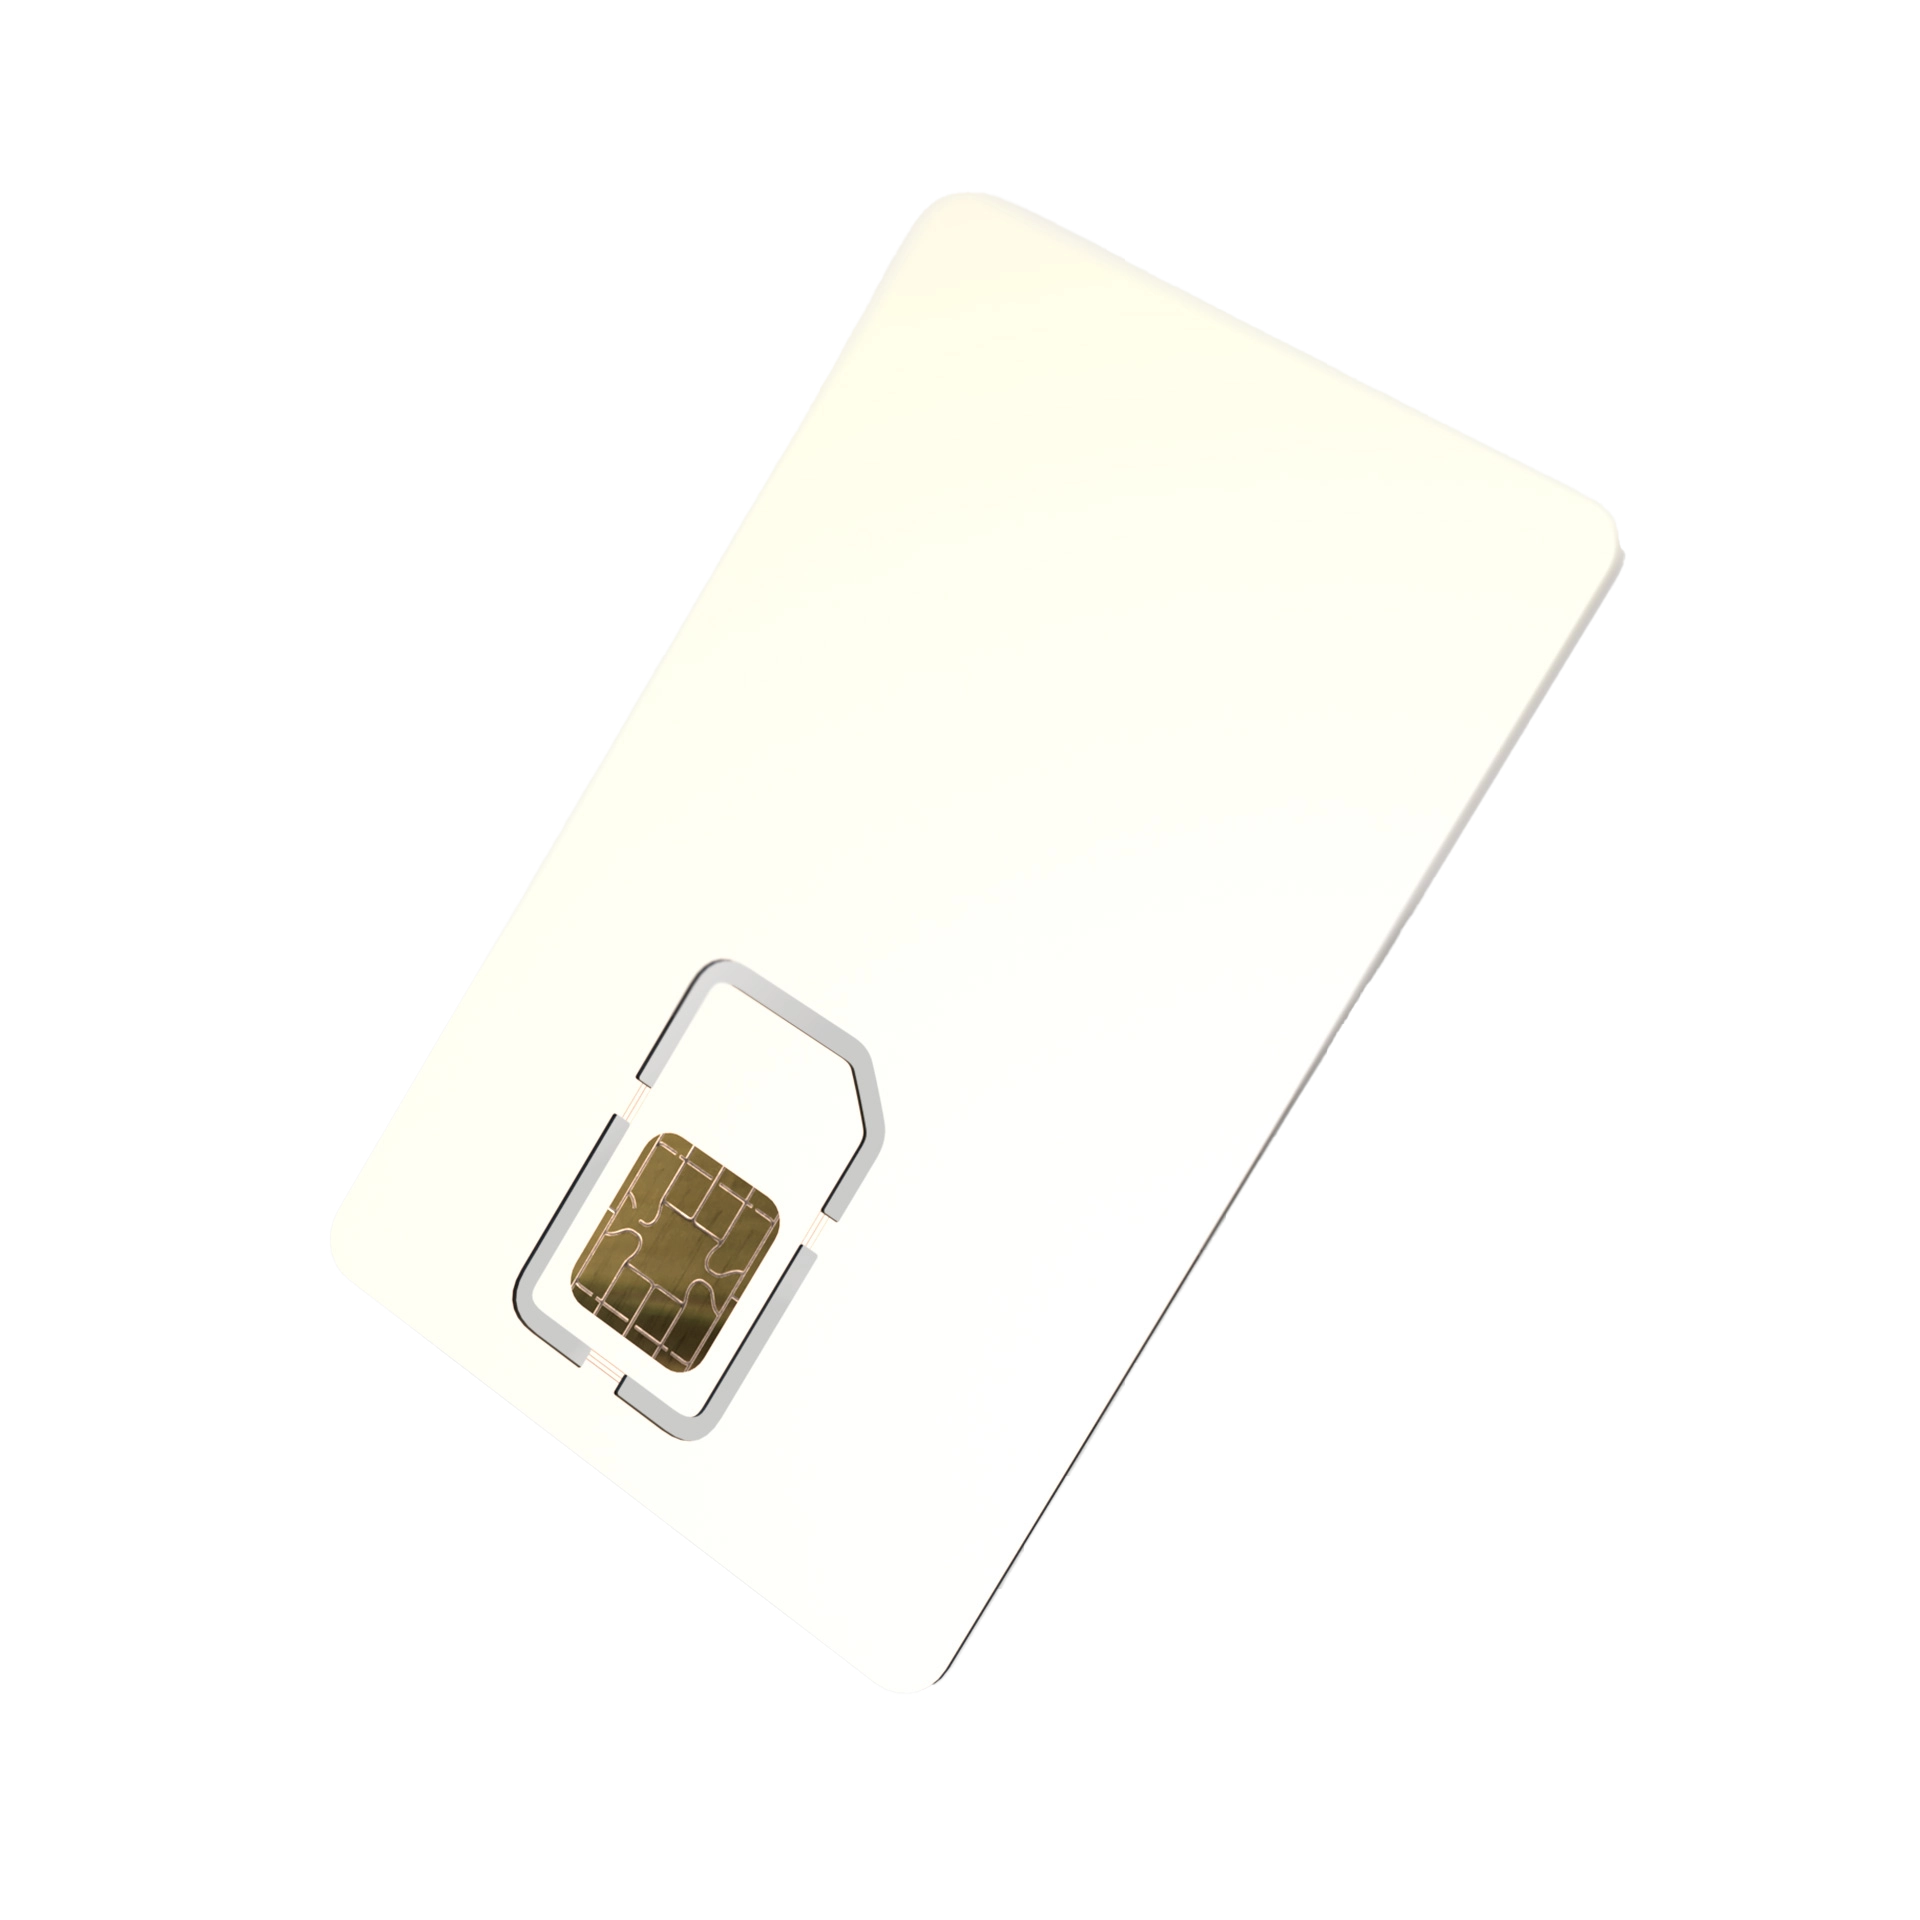 Javacard SIM format for DIY Satochip project.